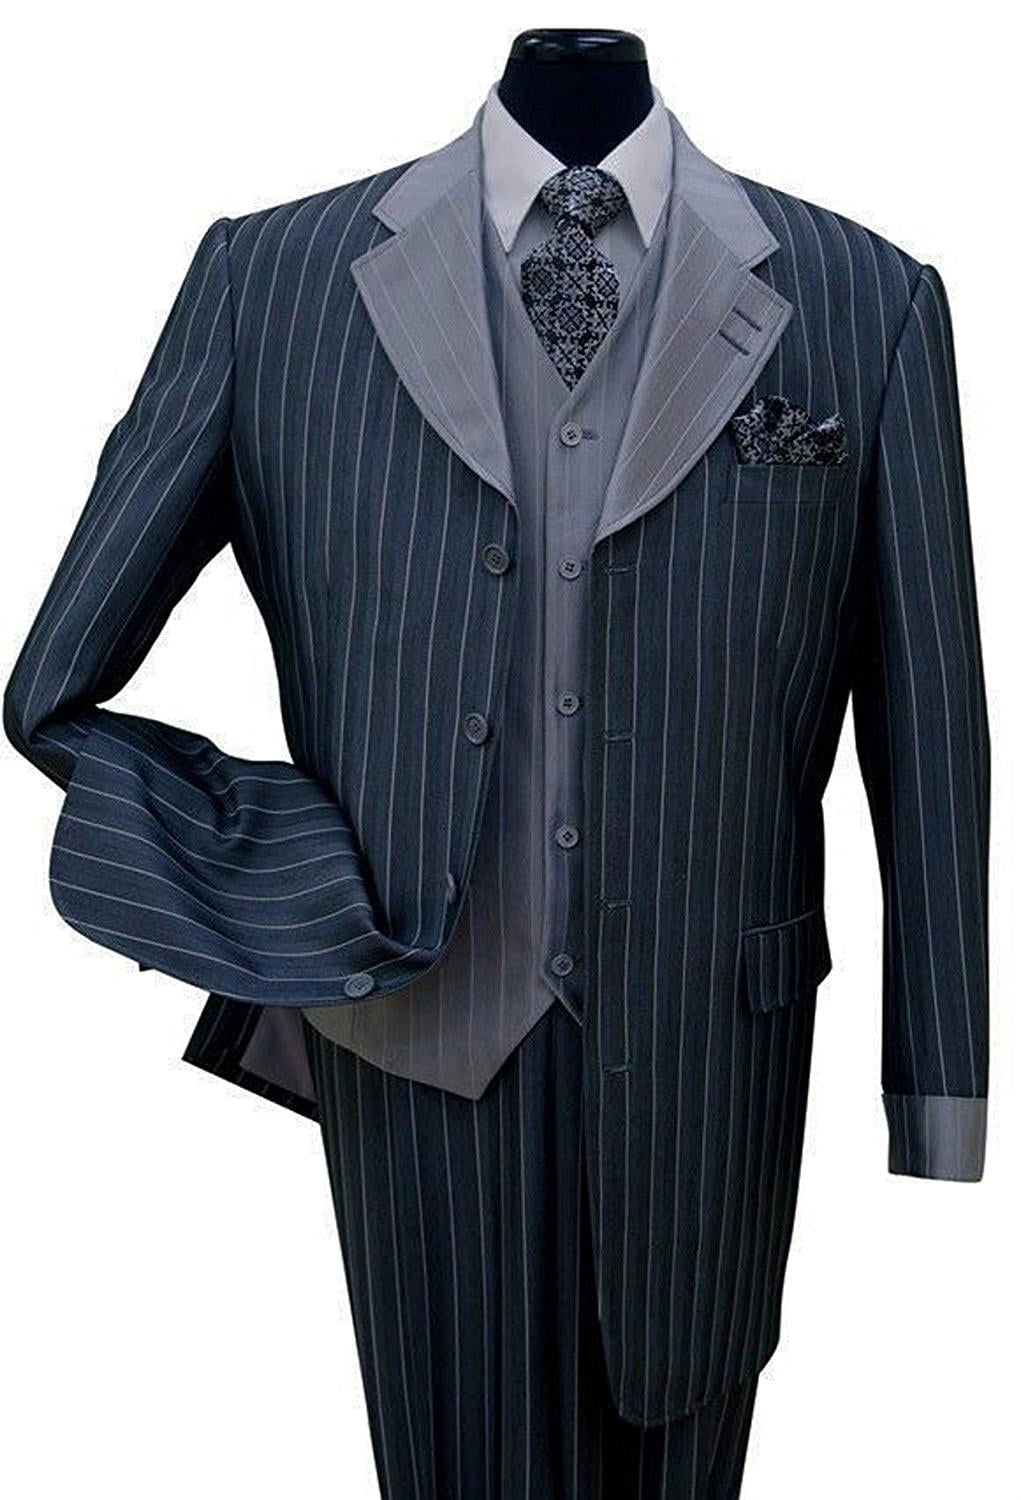 Pinestripe Fashion Suit with Contrast Collar, Cuffs & Vest - Walmart.com